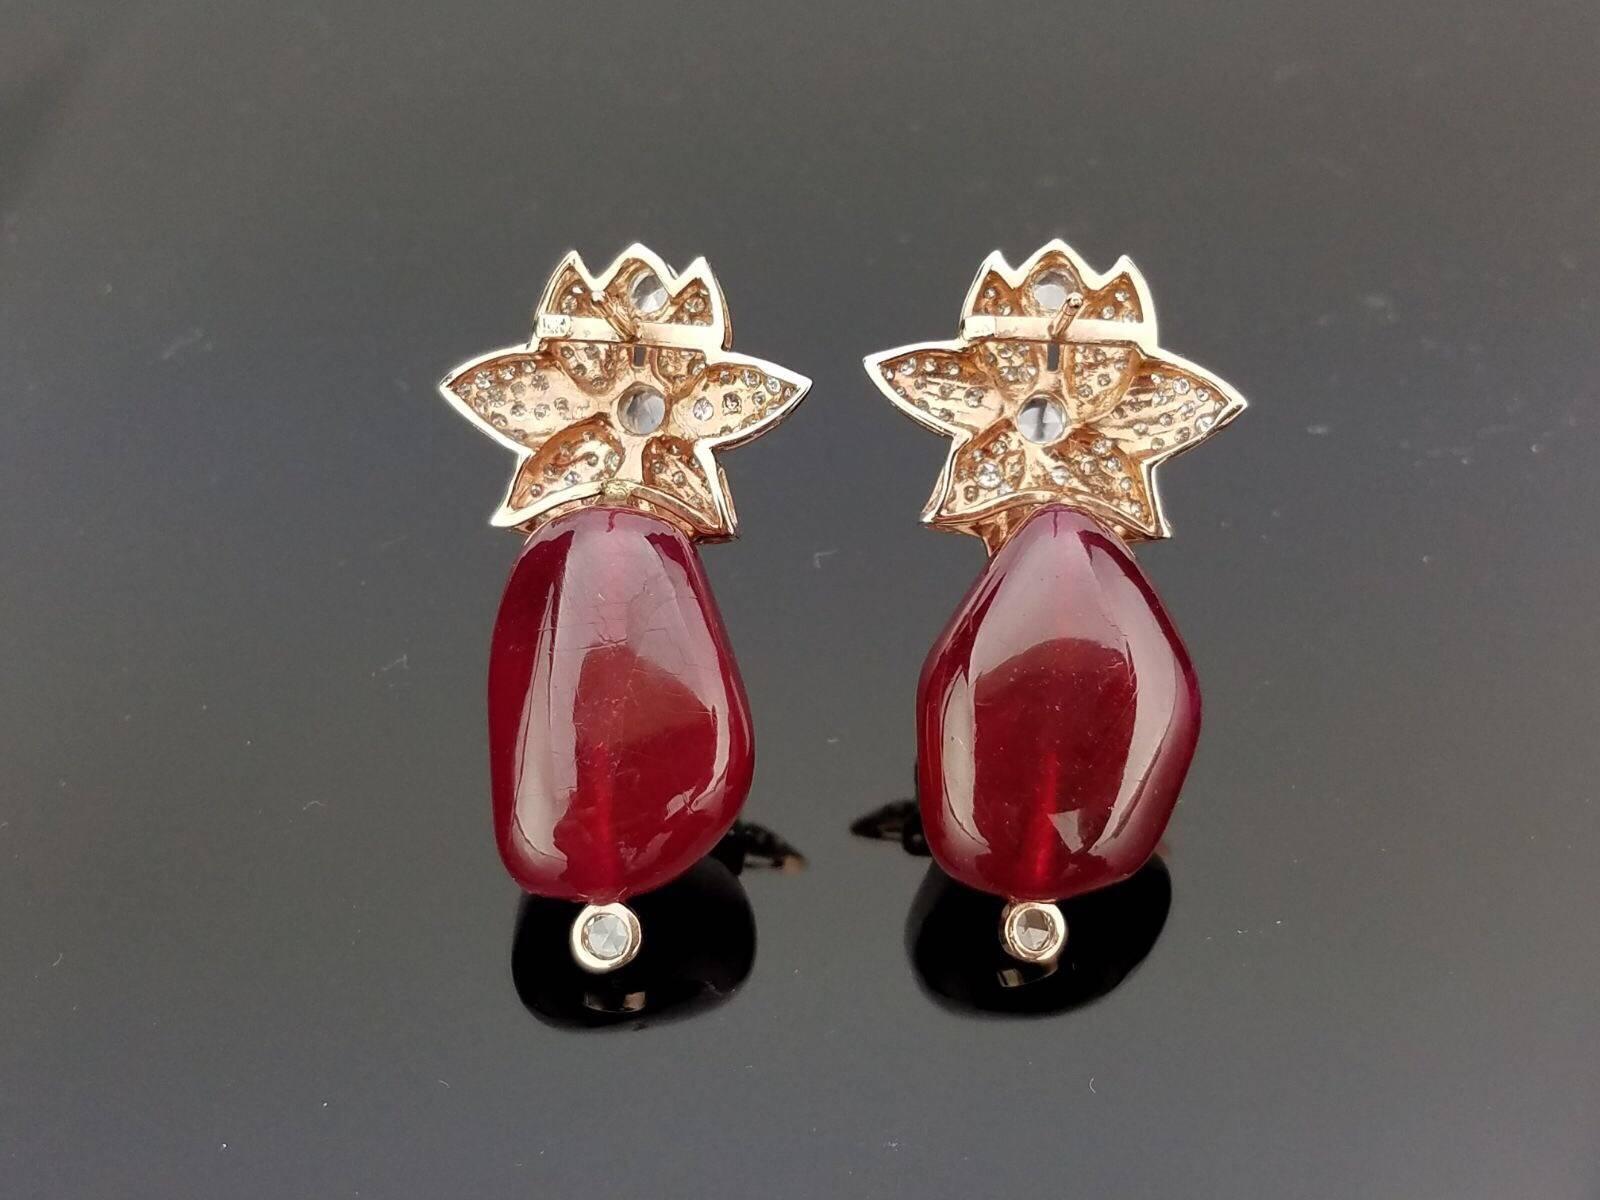 Modern 77.32 carat African Ruby Tumble Beads and Diamond Earrings